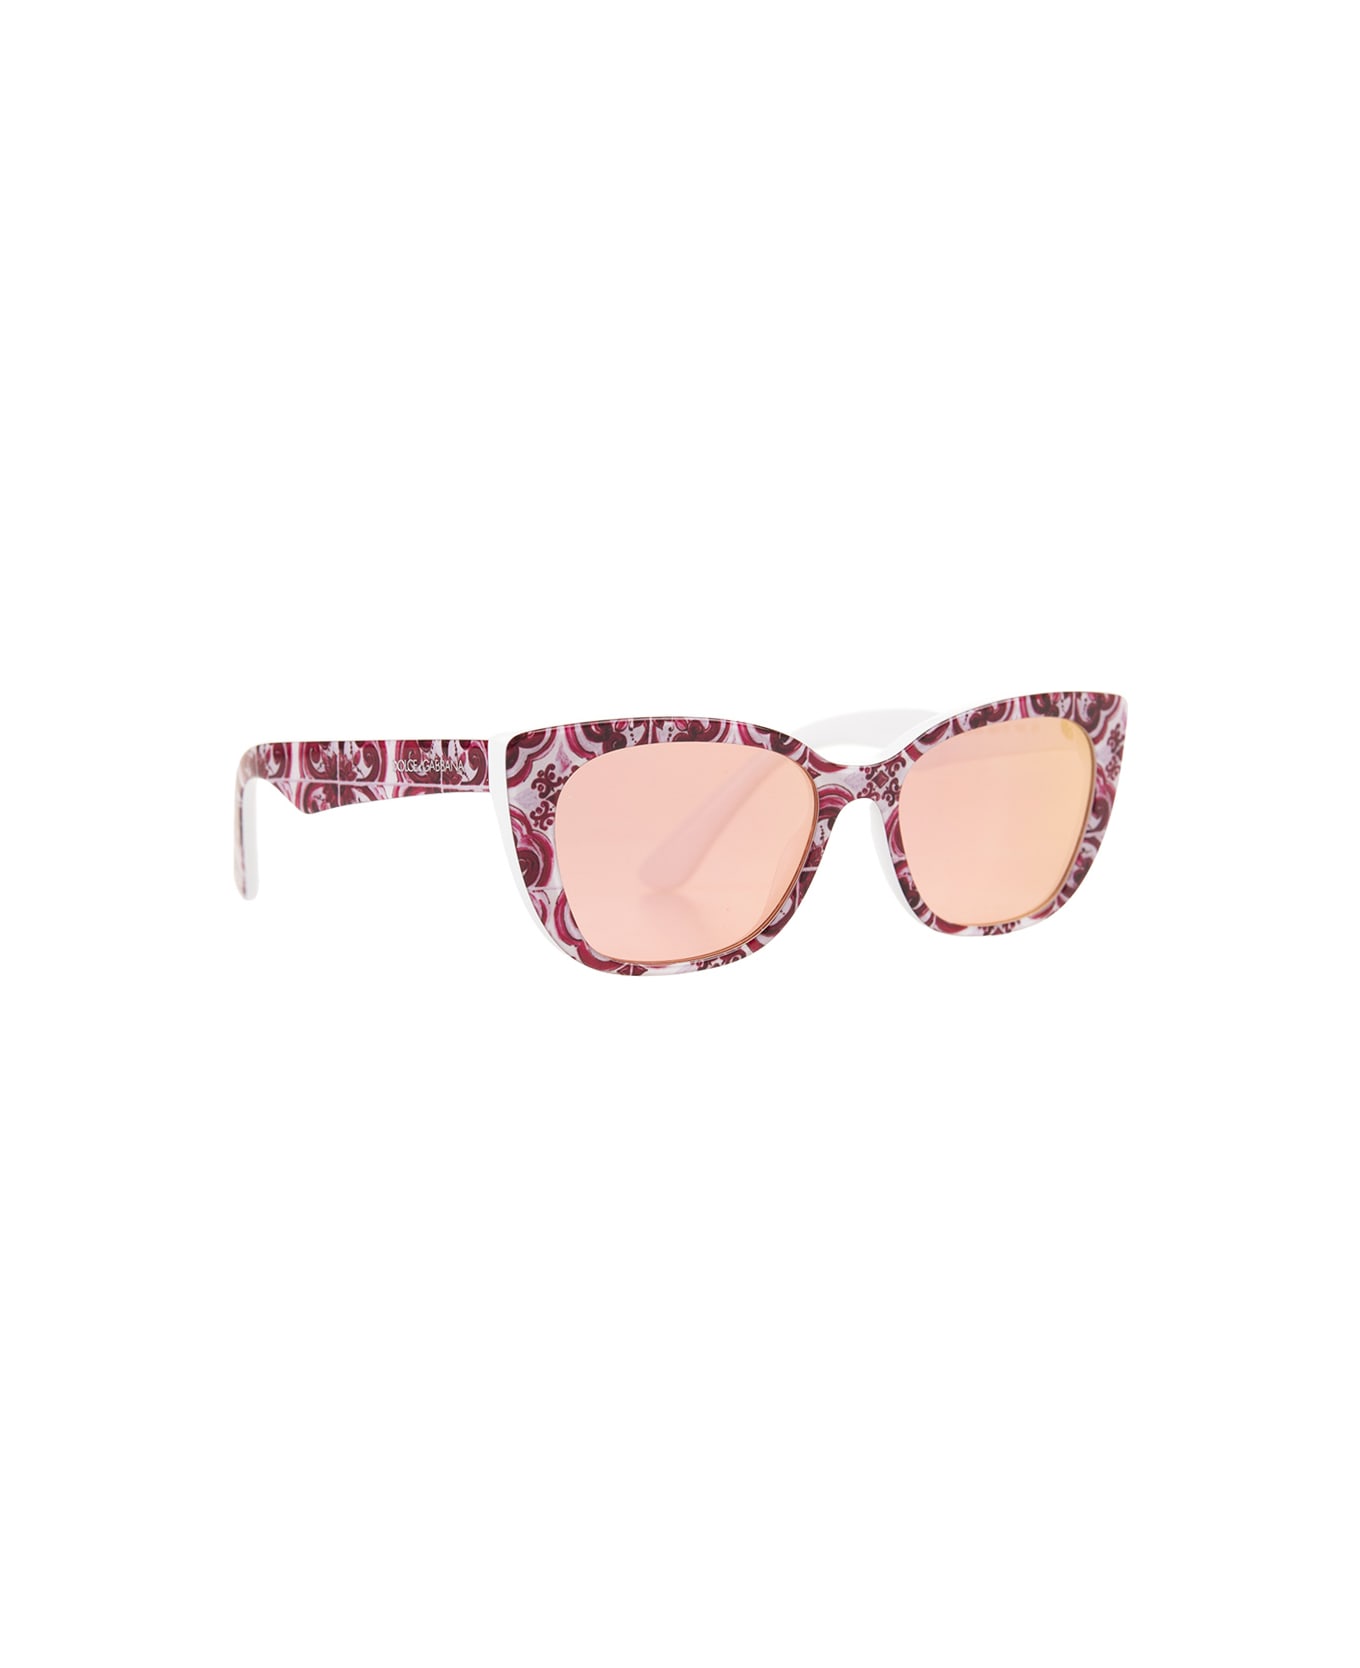 Dolce & Gabbana Sunglasses With Pink Majolica Print - Pink